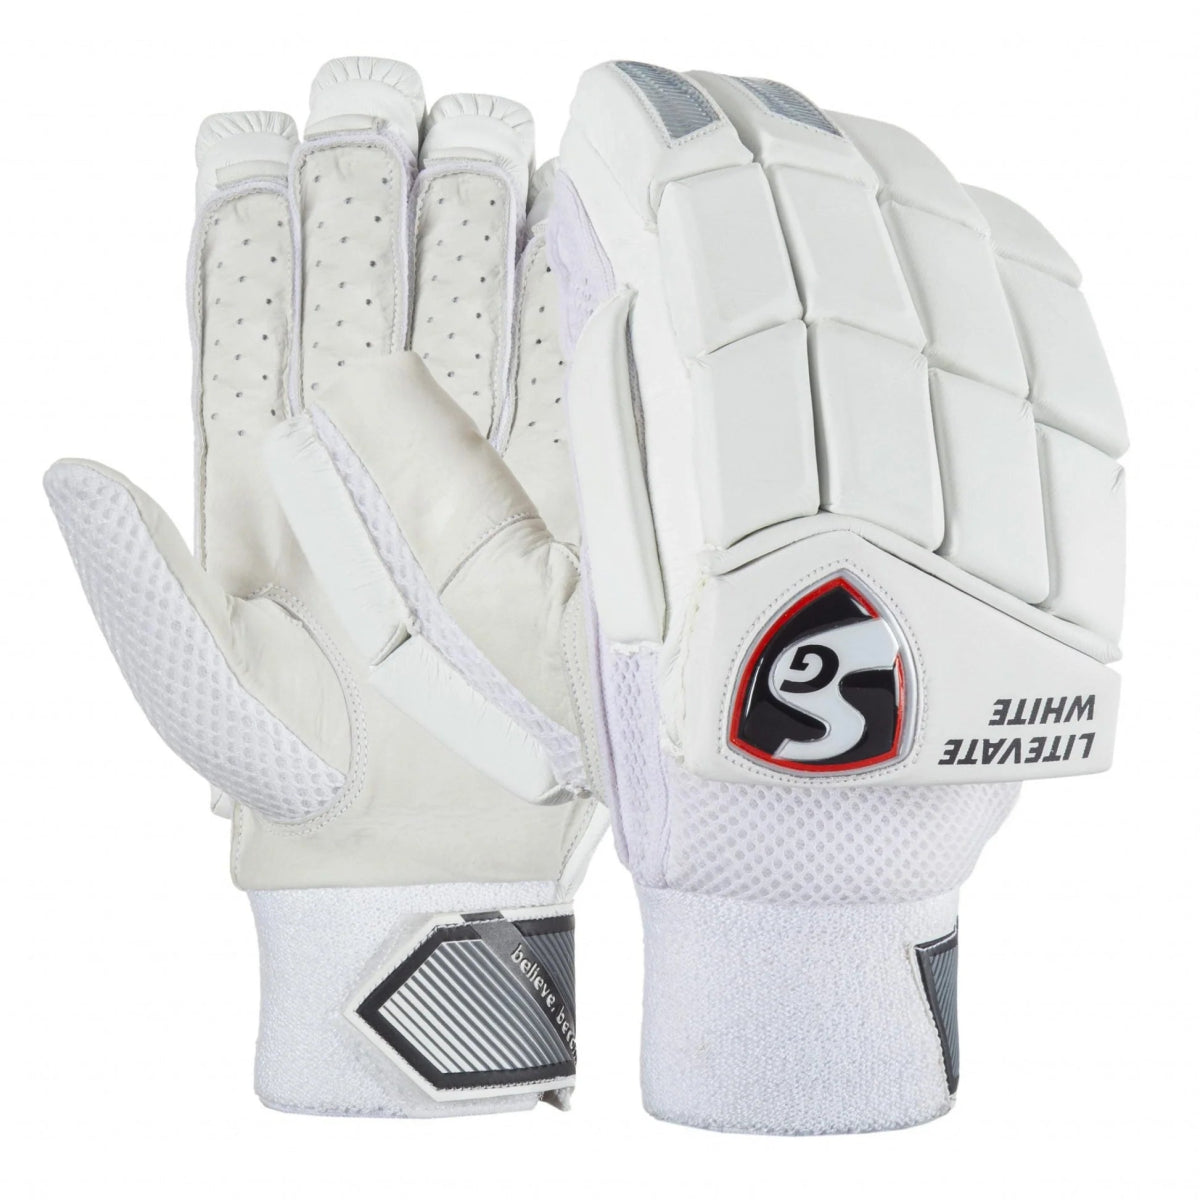 SG Litevate White Junior Cricket Batting Gloves - Acrux Sports